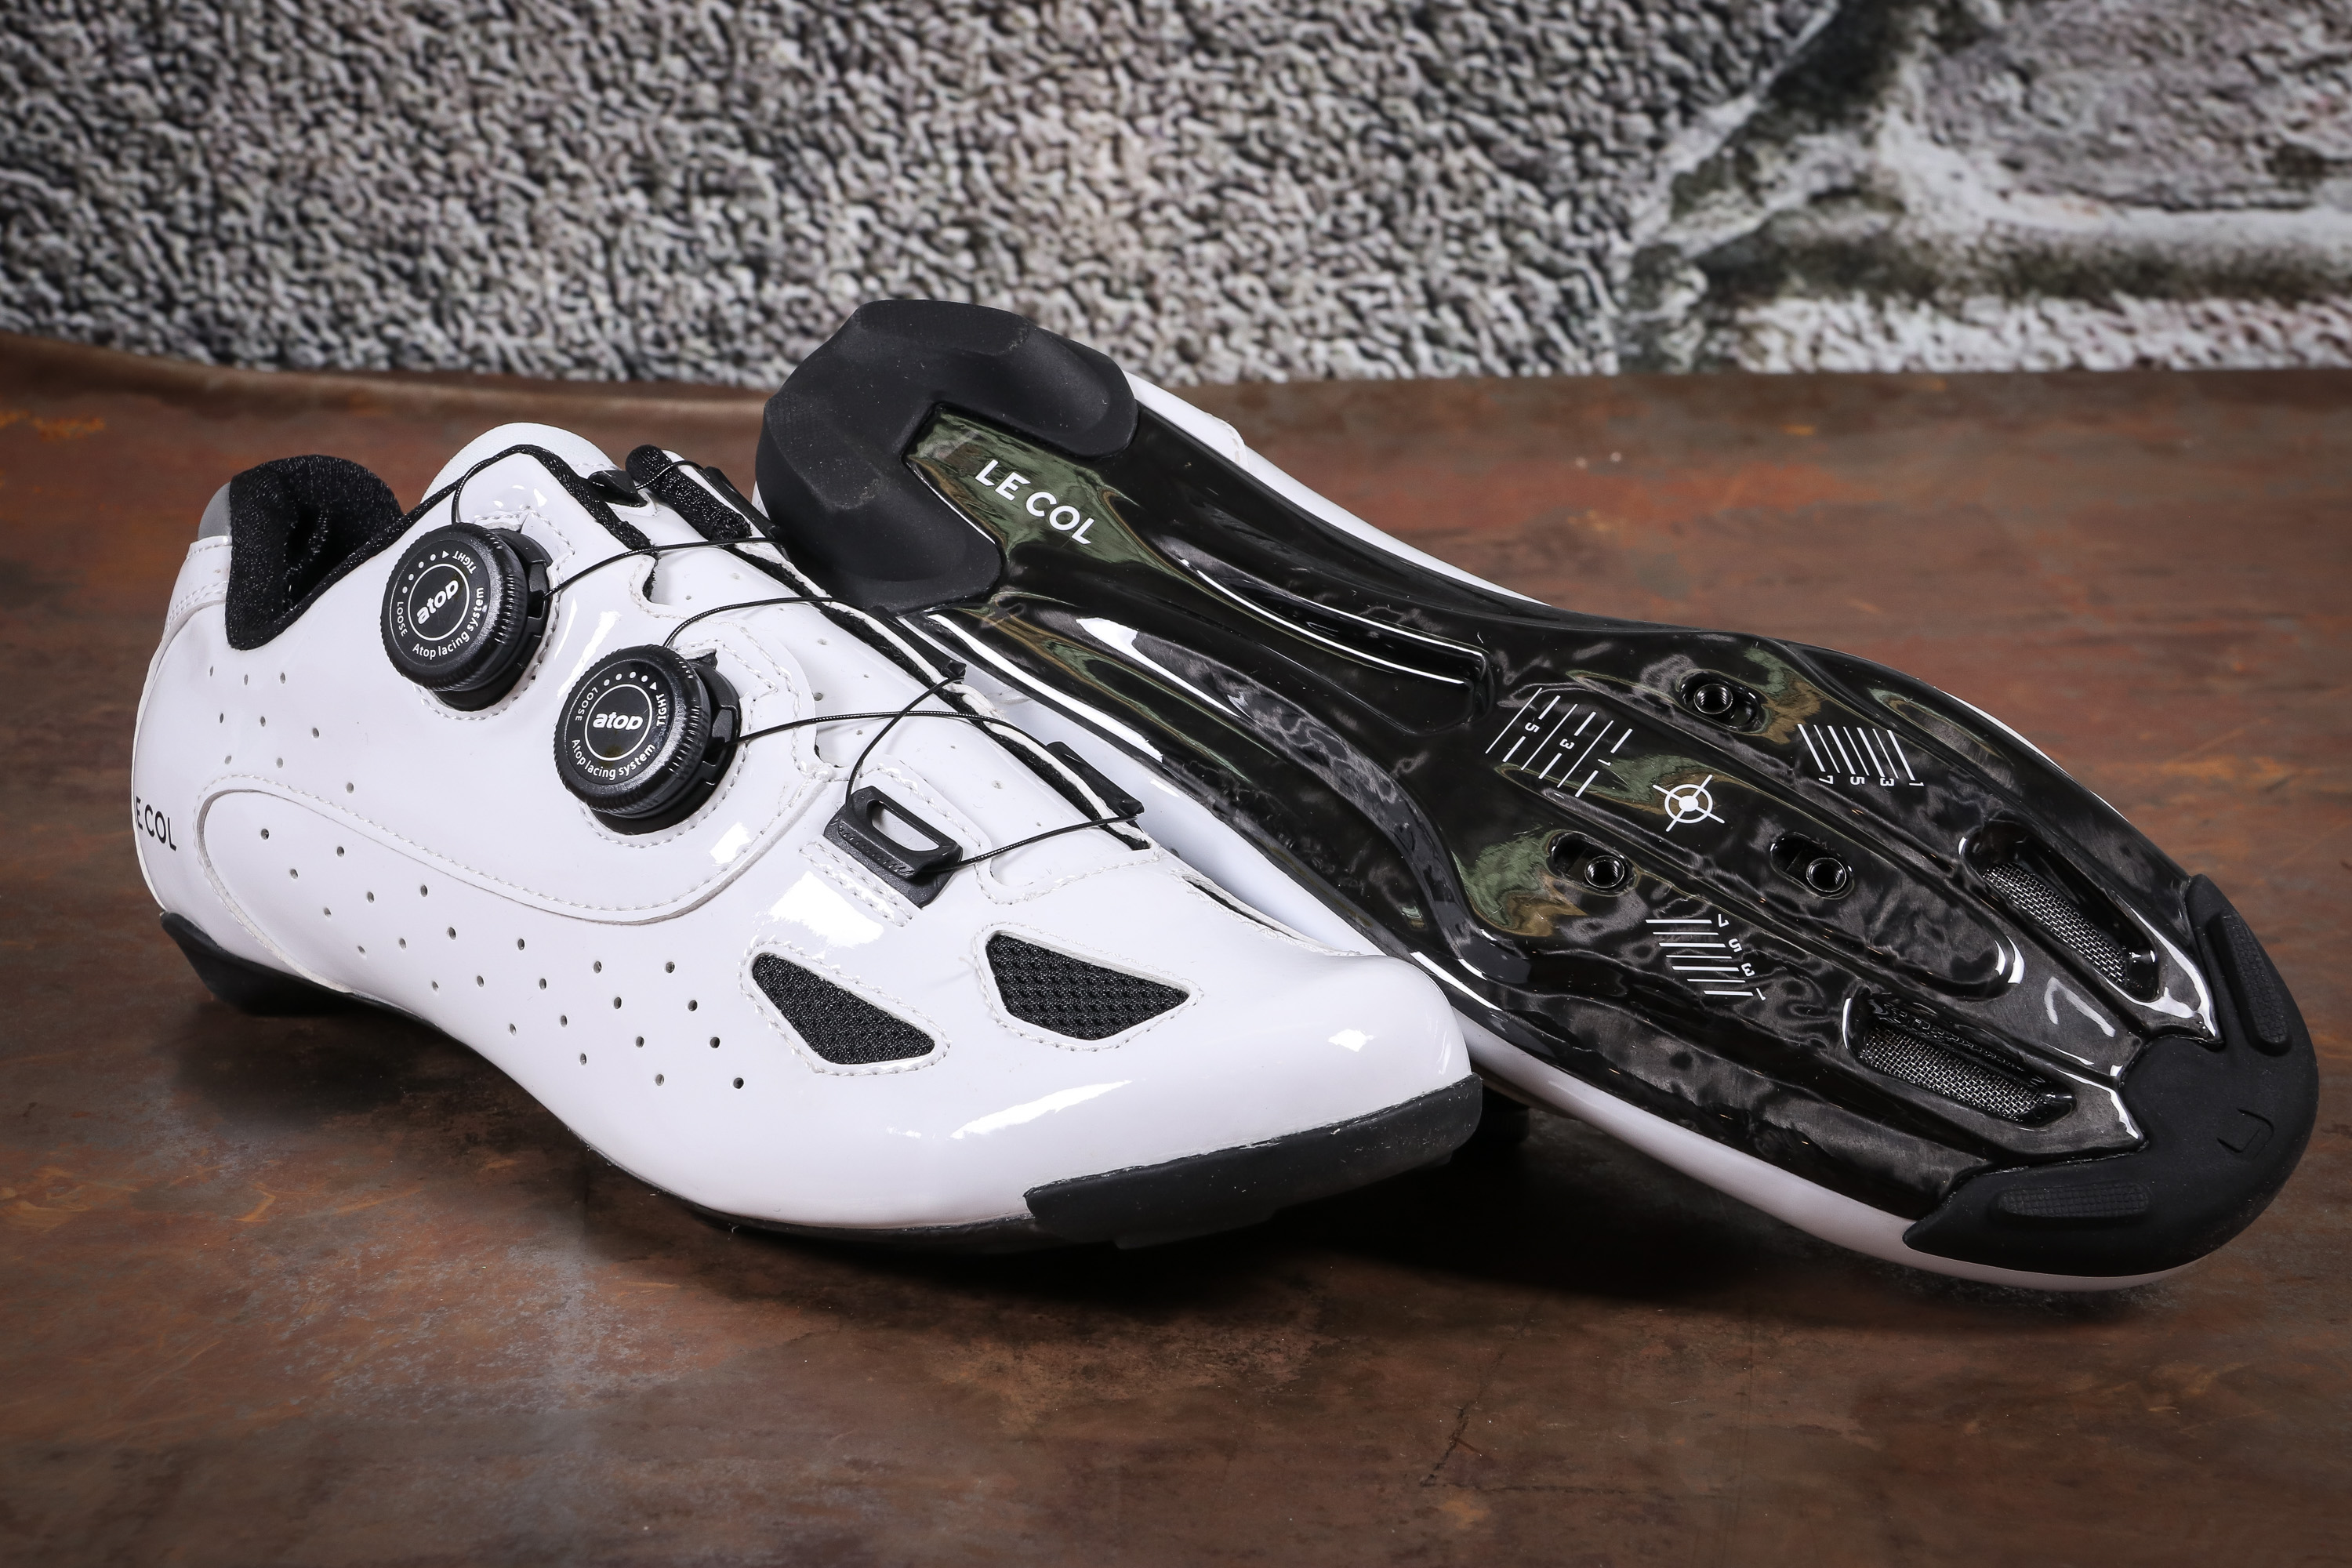 Review: Le Col Pro Carbon Cycling Shoes 